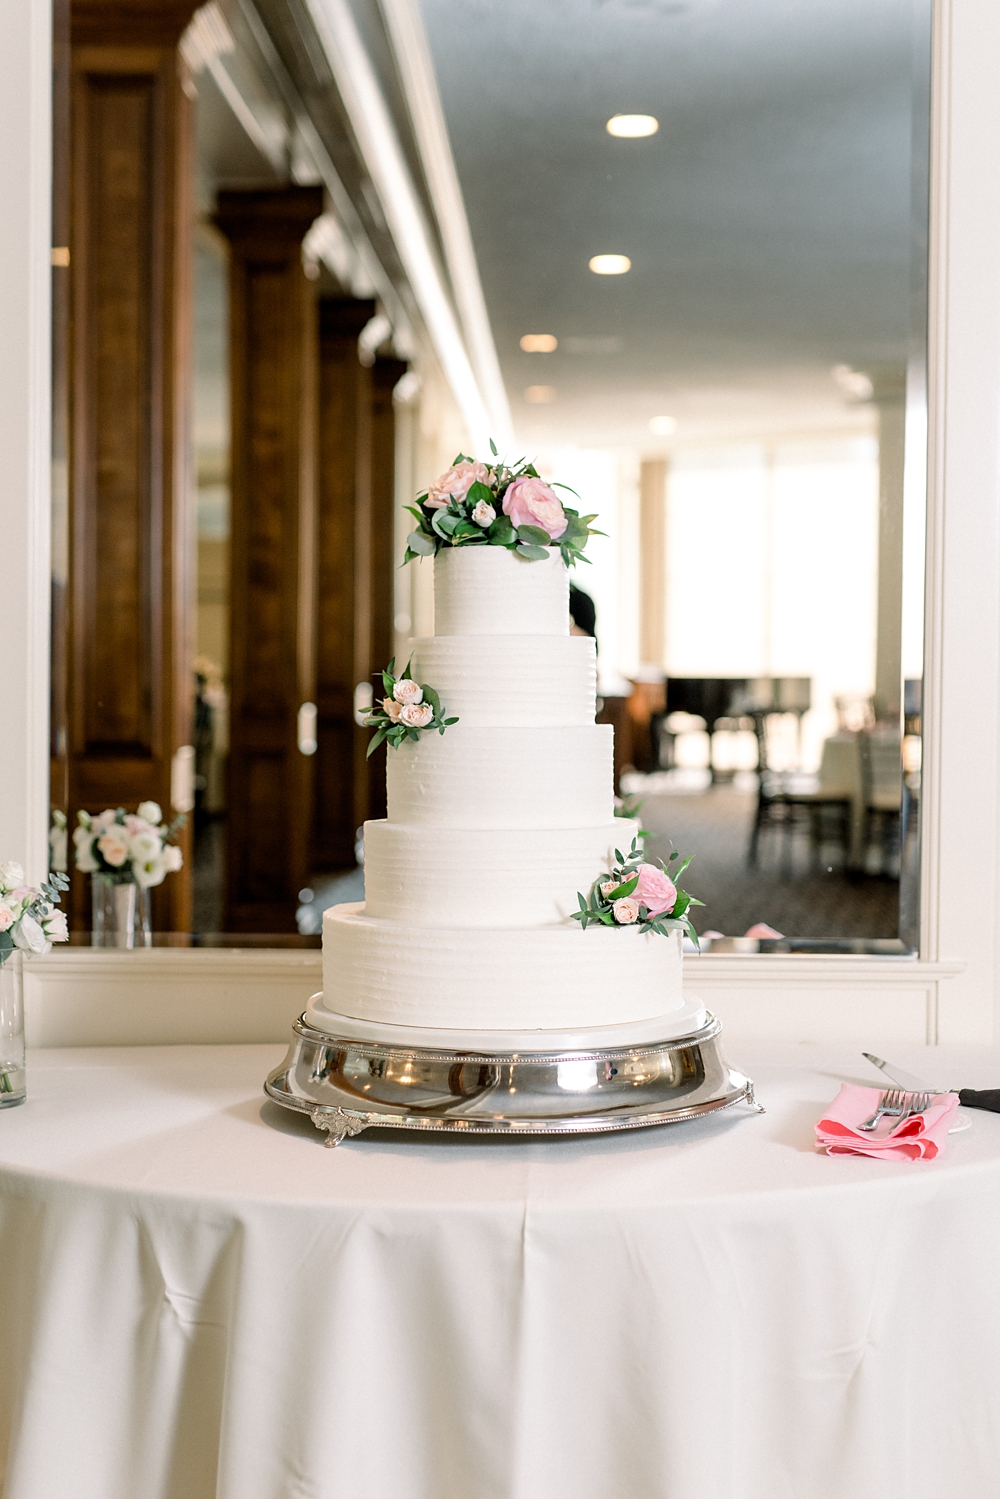 Classic 5 tiered white wedding cake